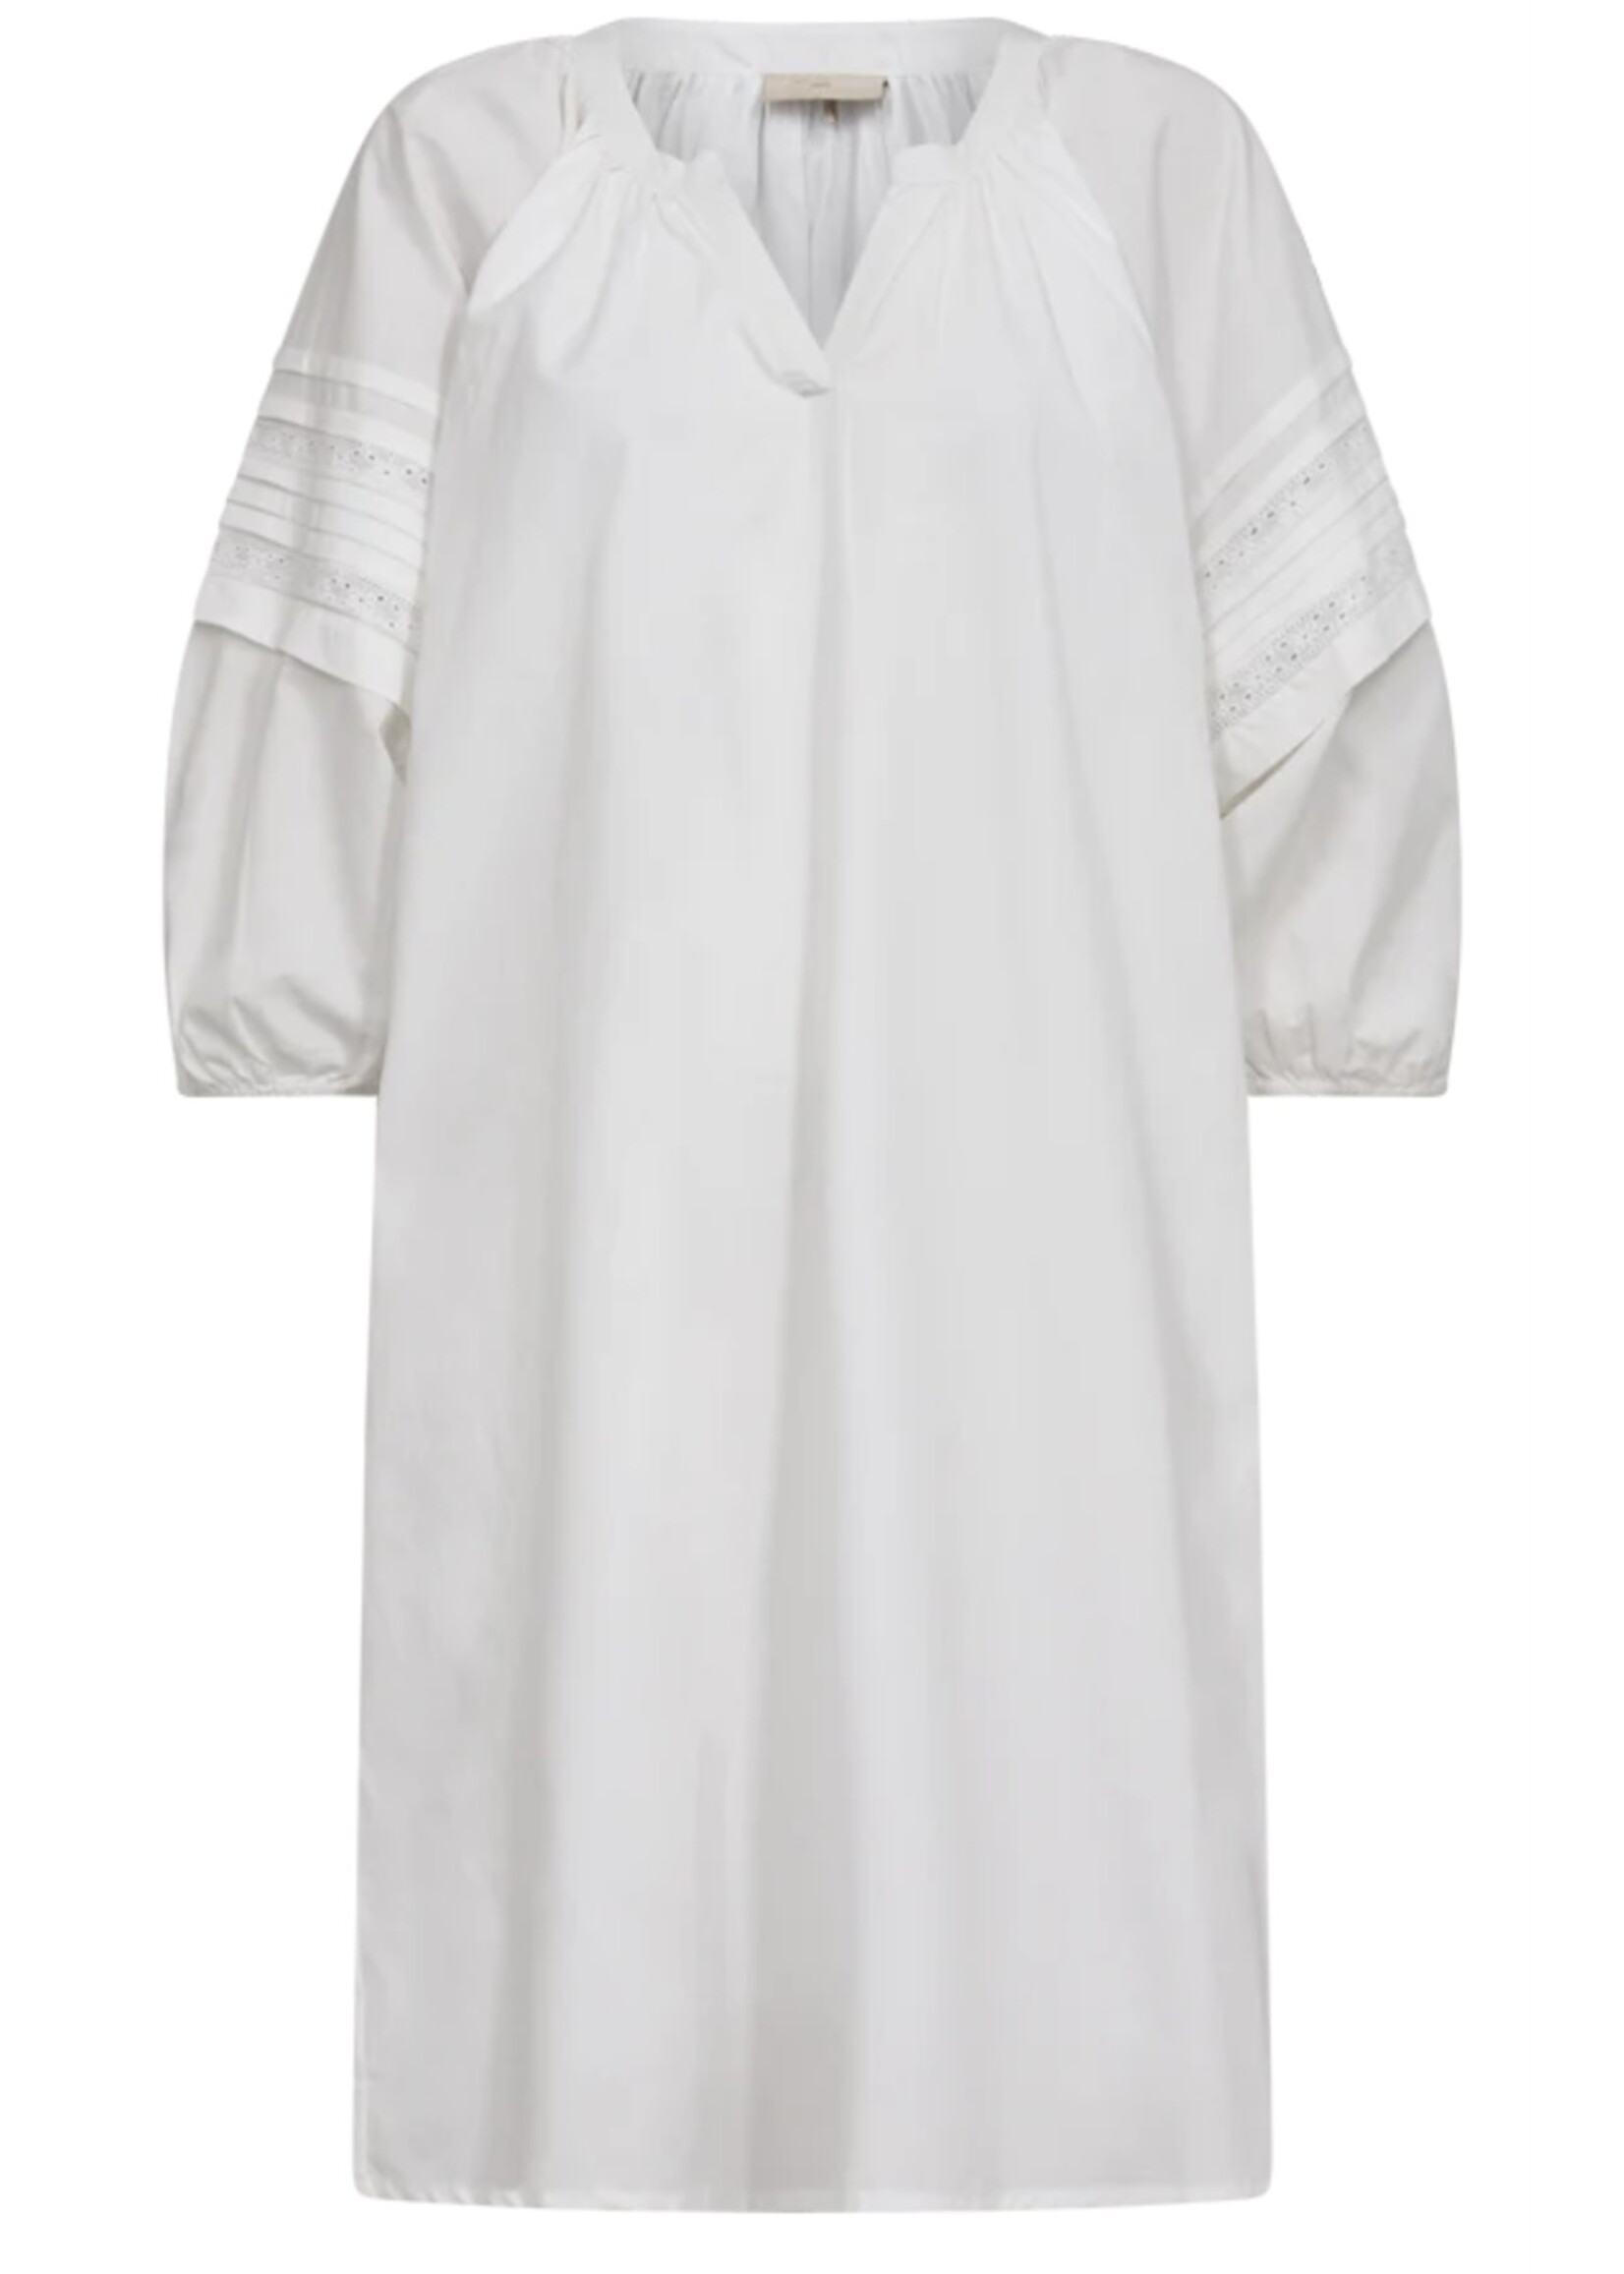 Freequent Freequent - Wiwa - Dress - Brilliant white, Black